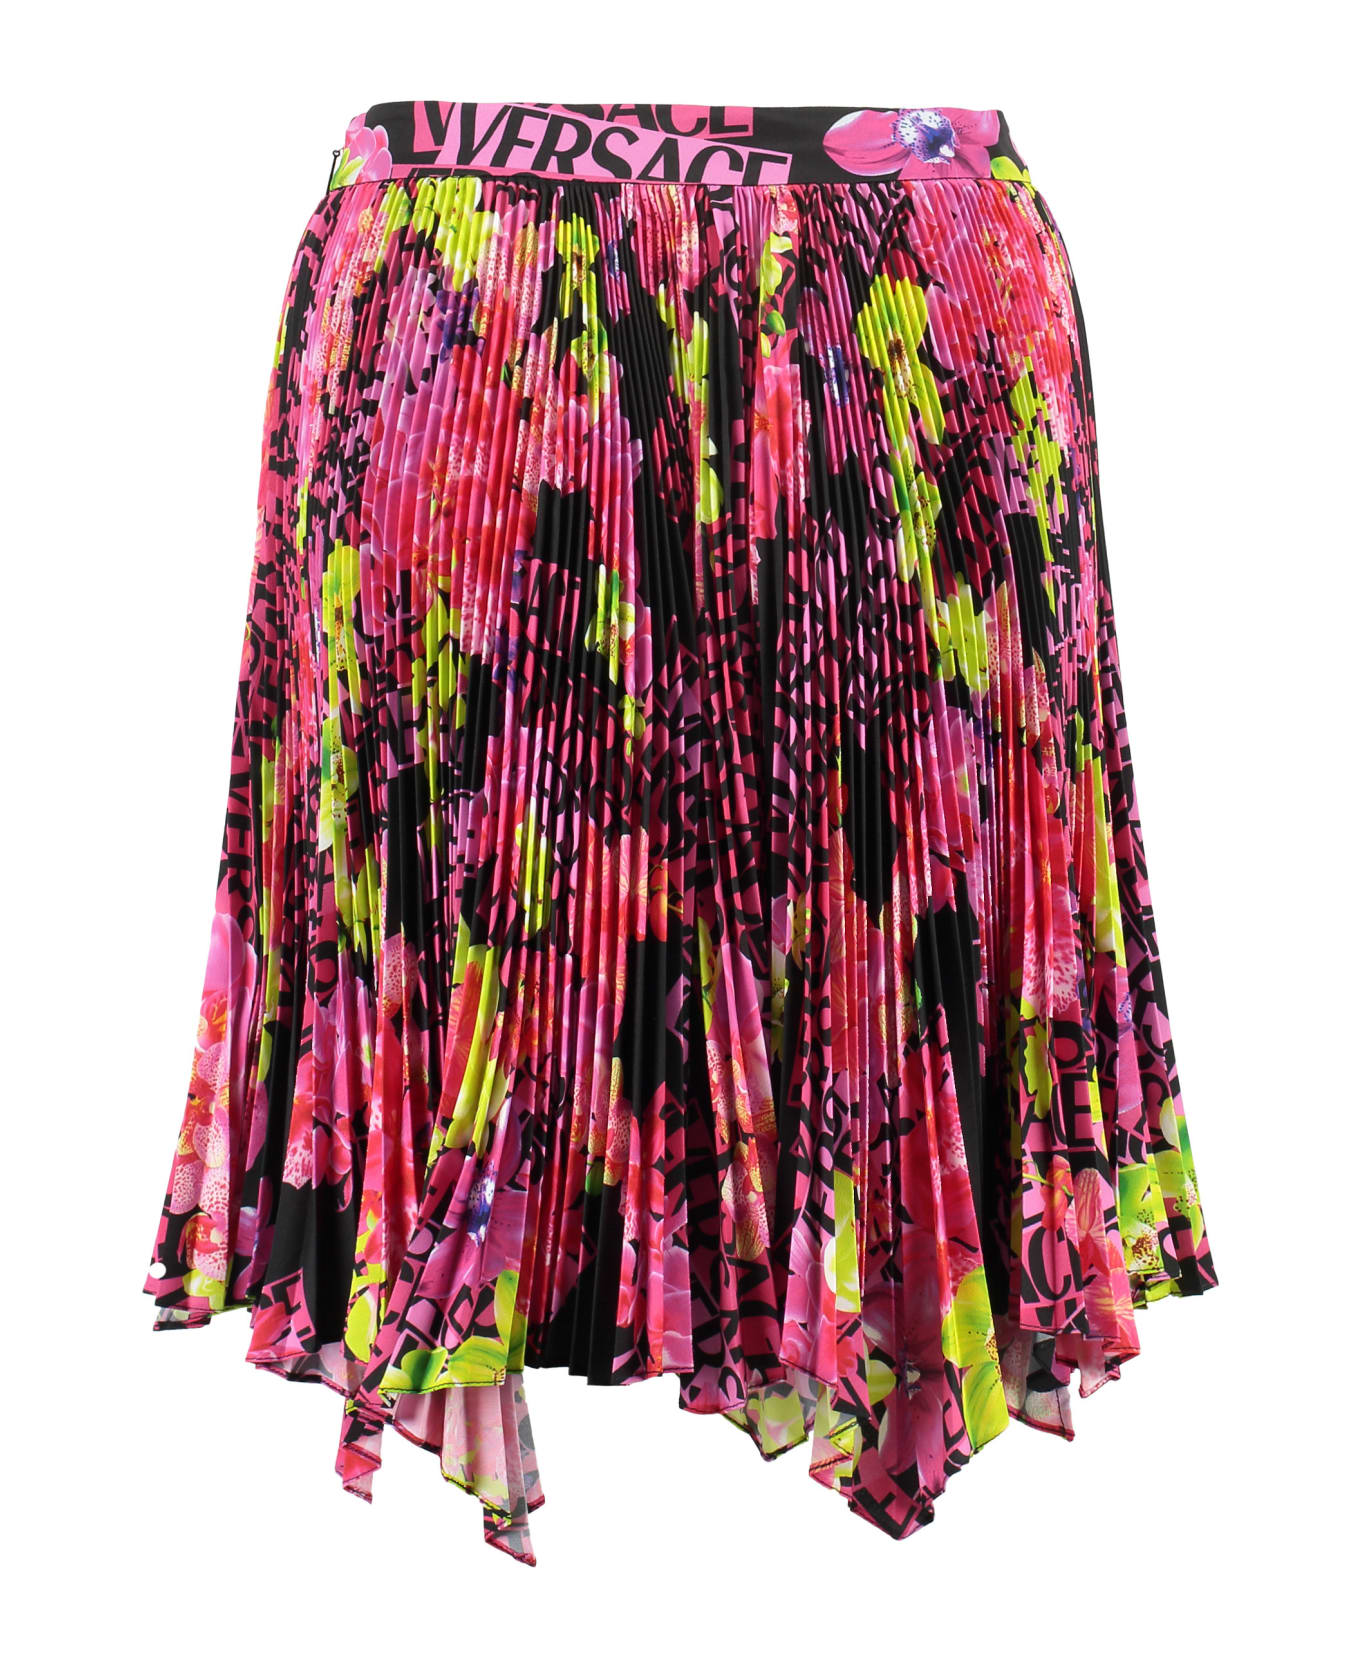 Versace Printed Pleated Skirt - Multicolor